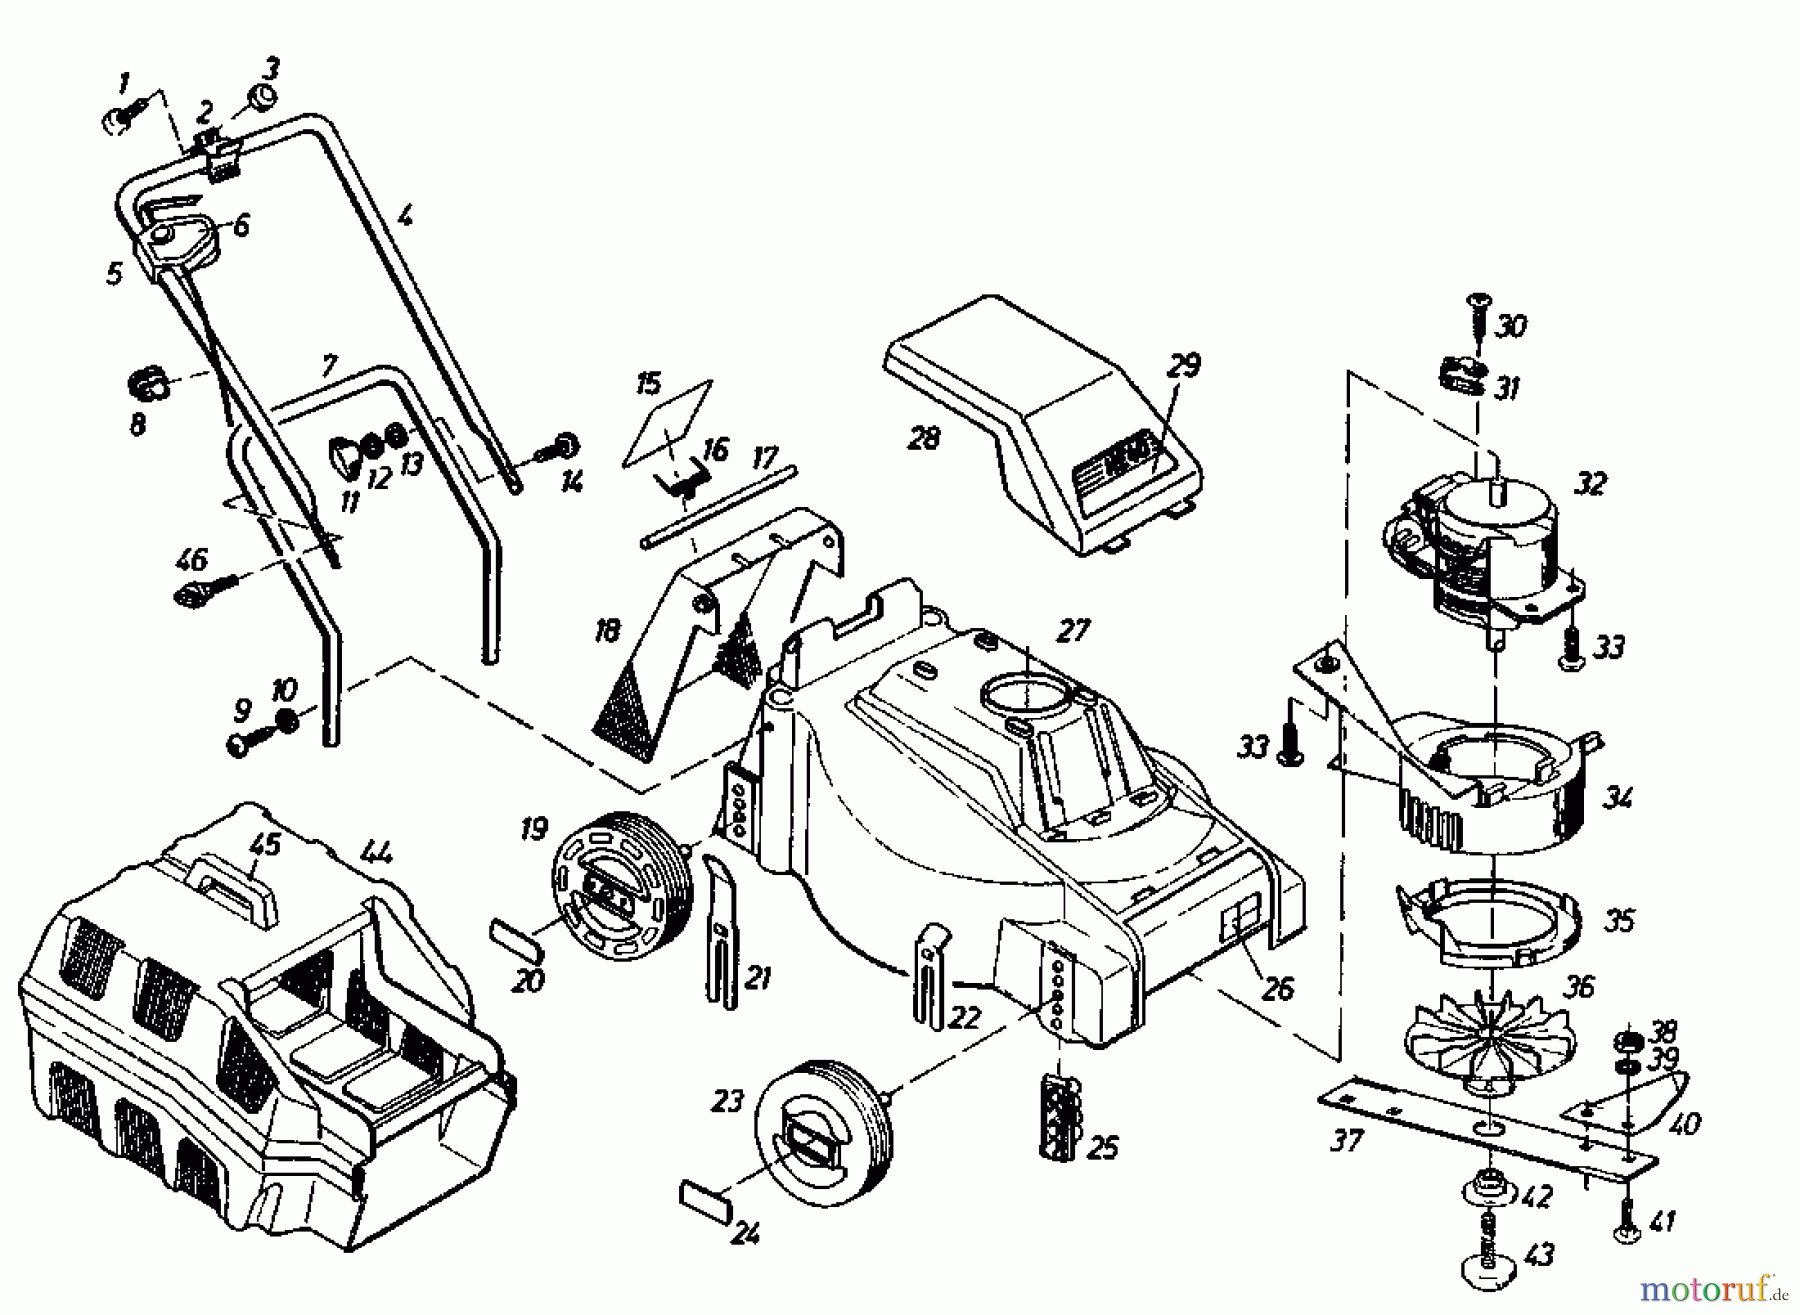  Gutbrod Electric mower HE 40 02889.02  (1985) Basic machine